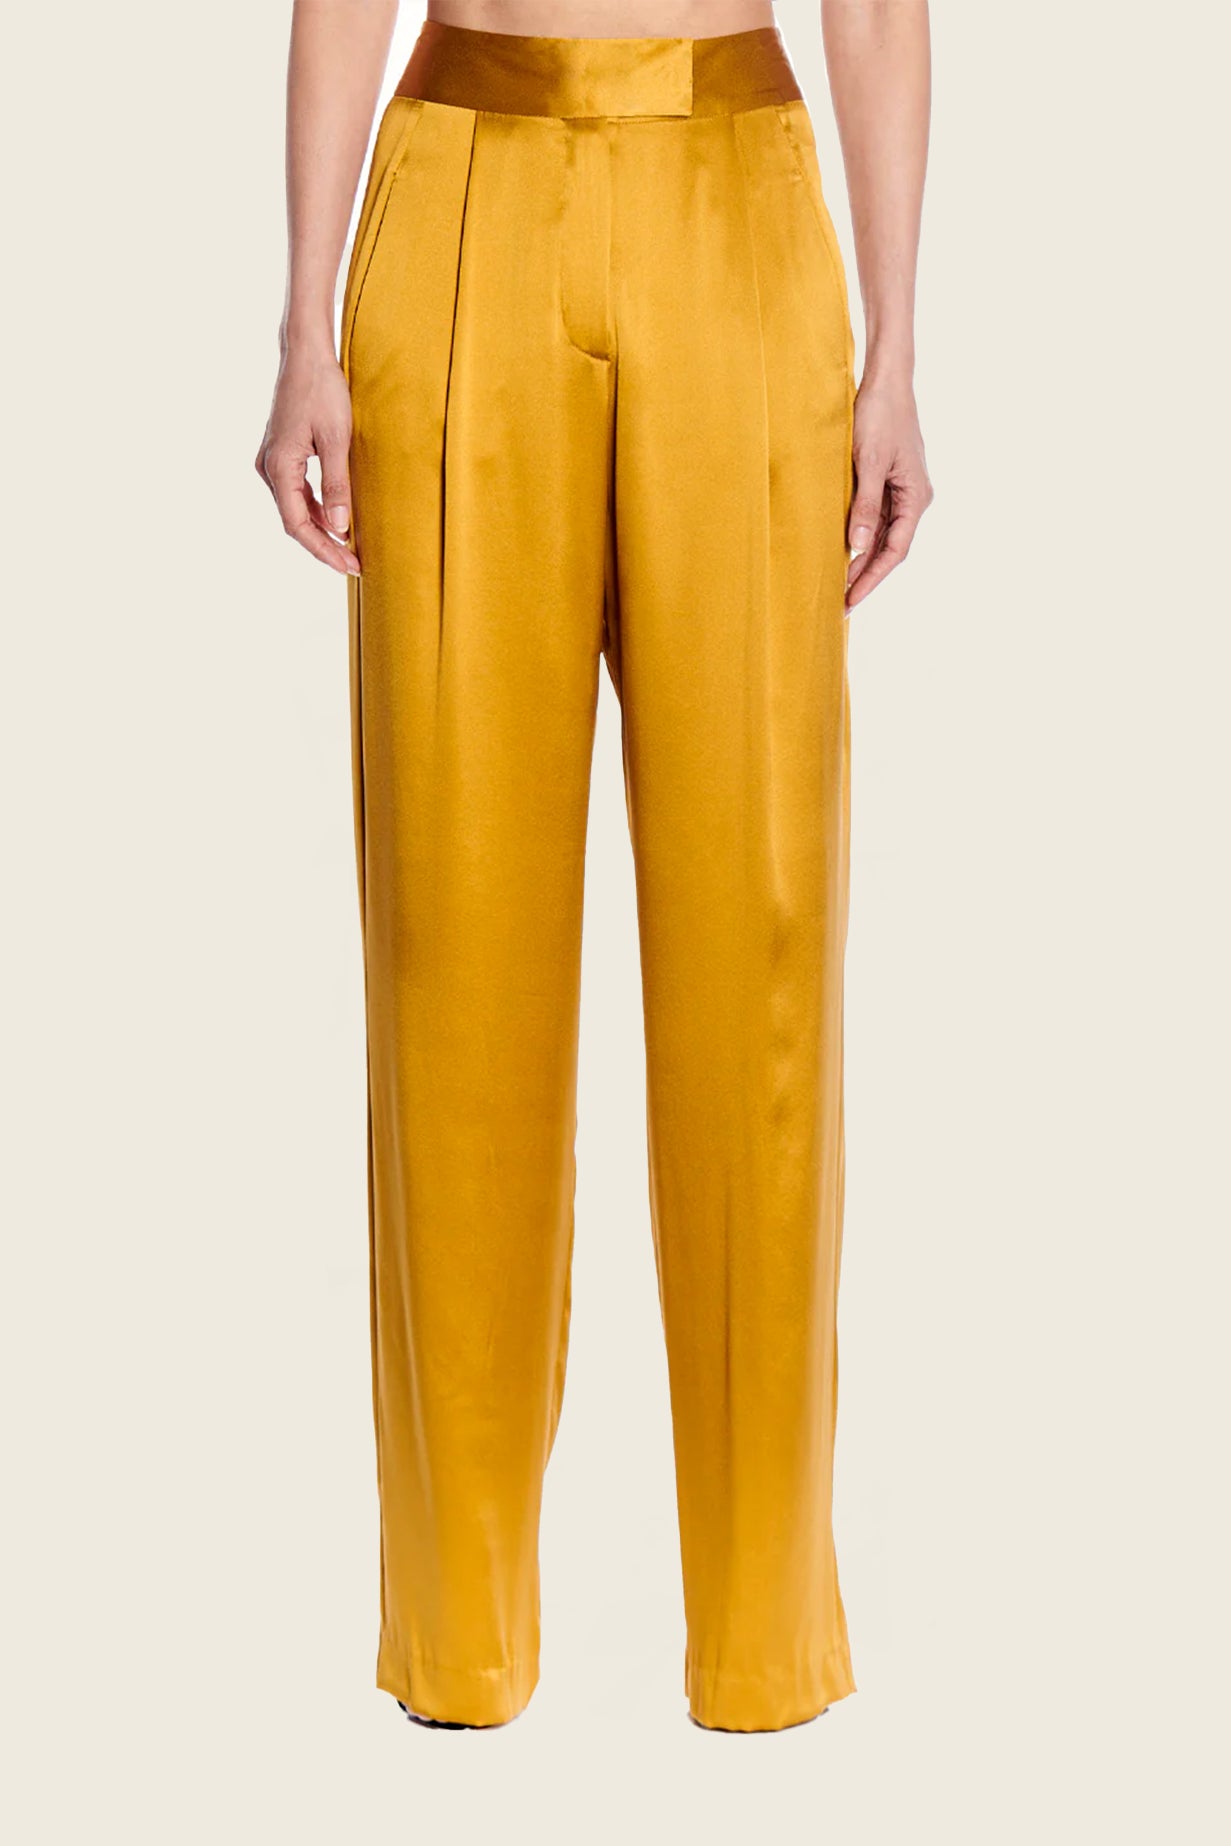 Bae City Womens Mustard Pants Size Small - beyond exchange